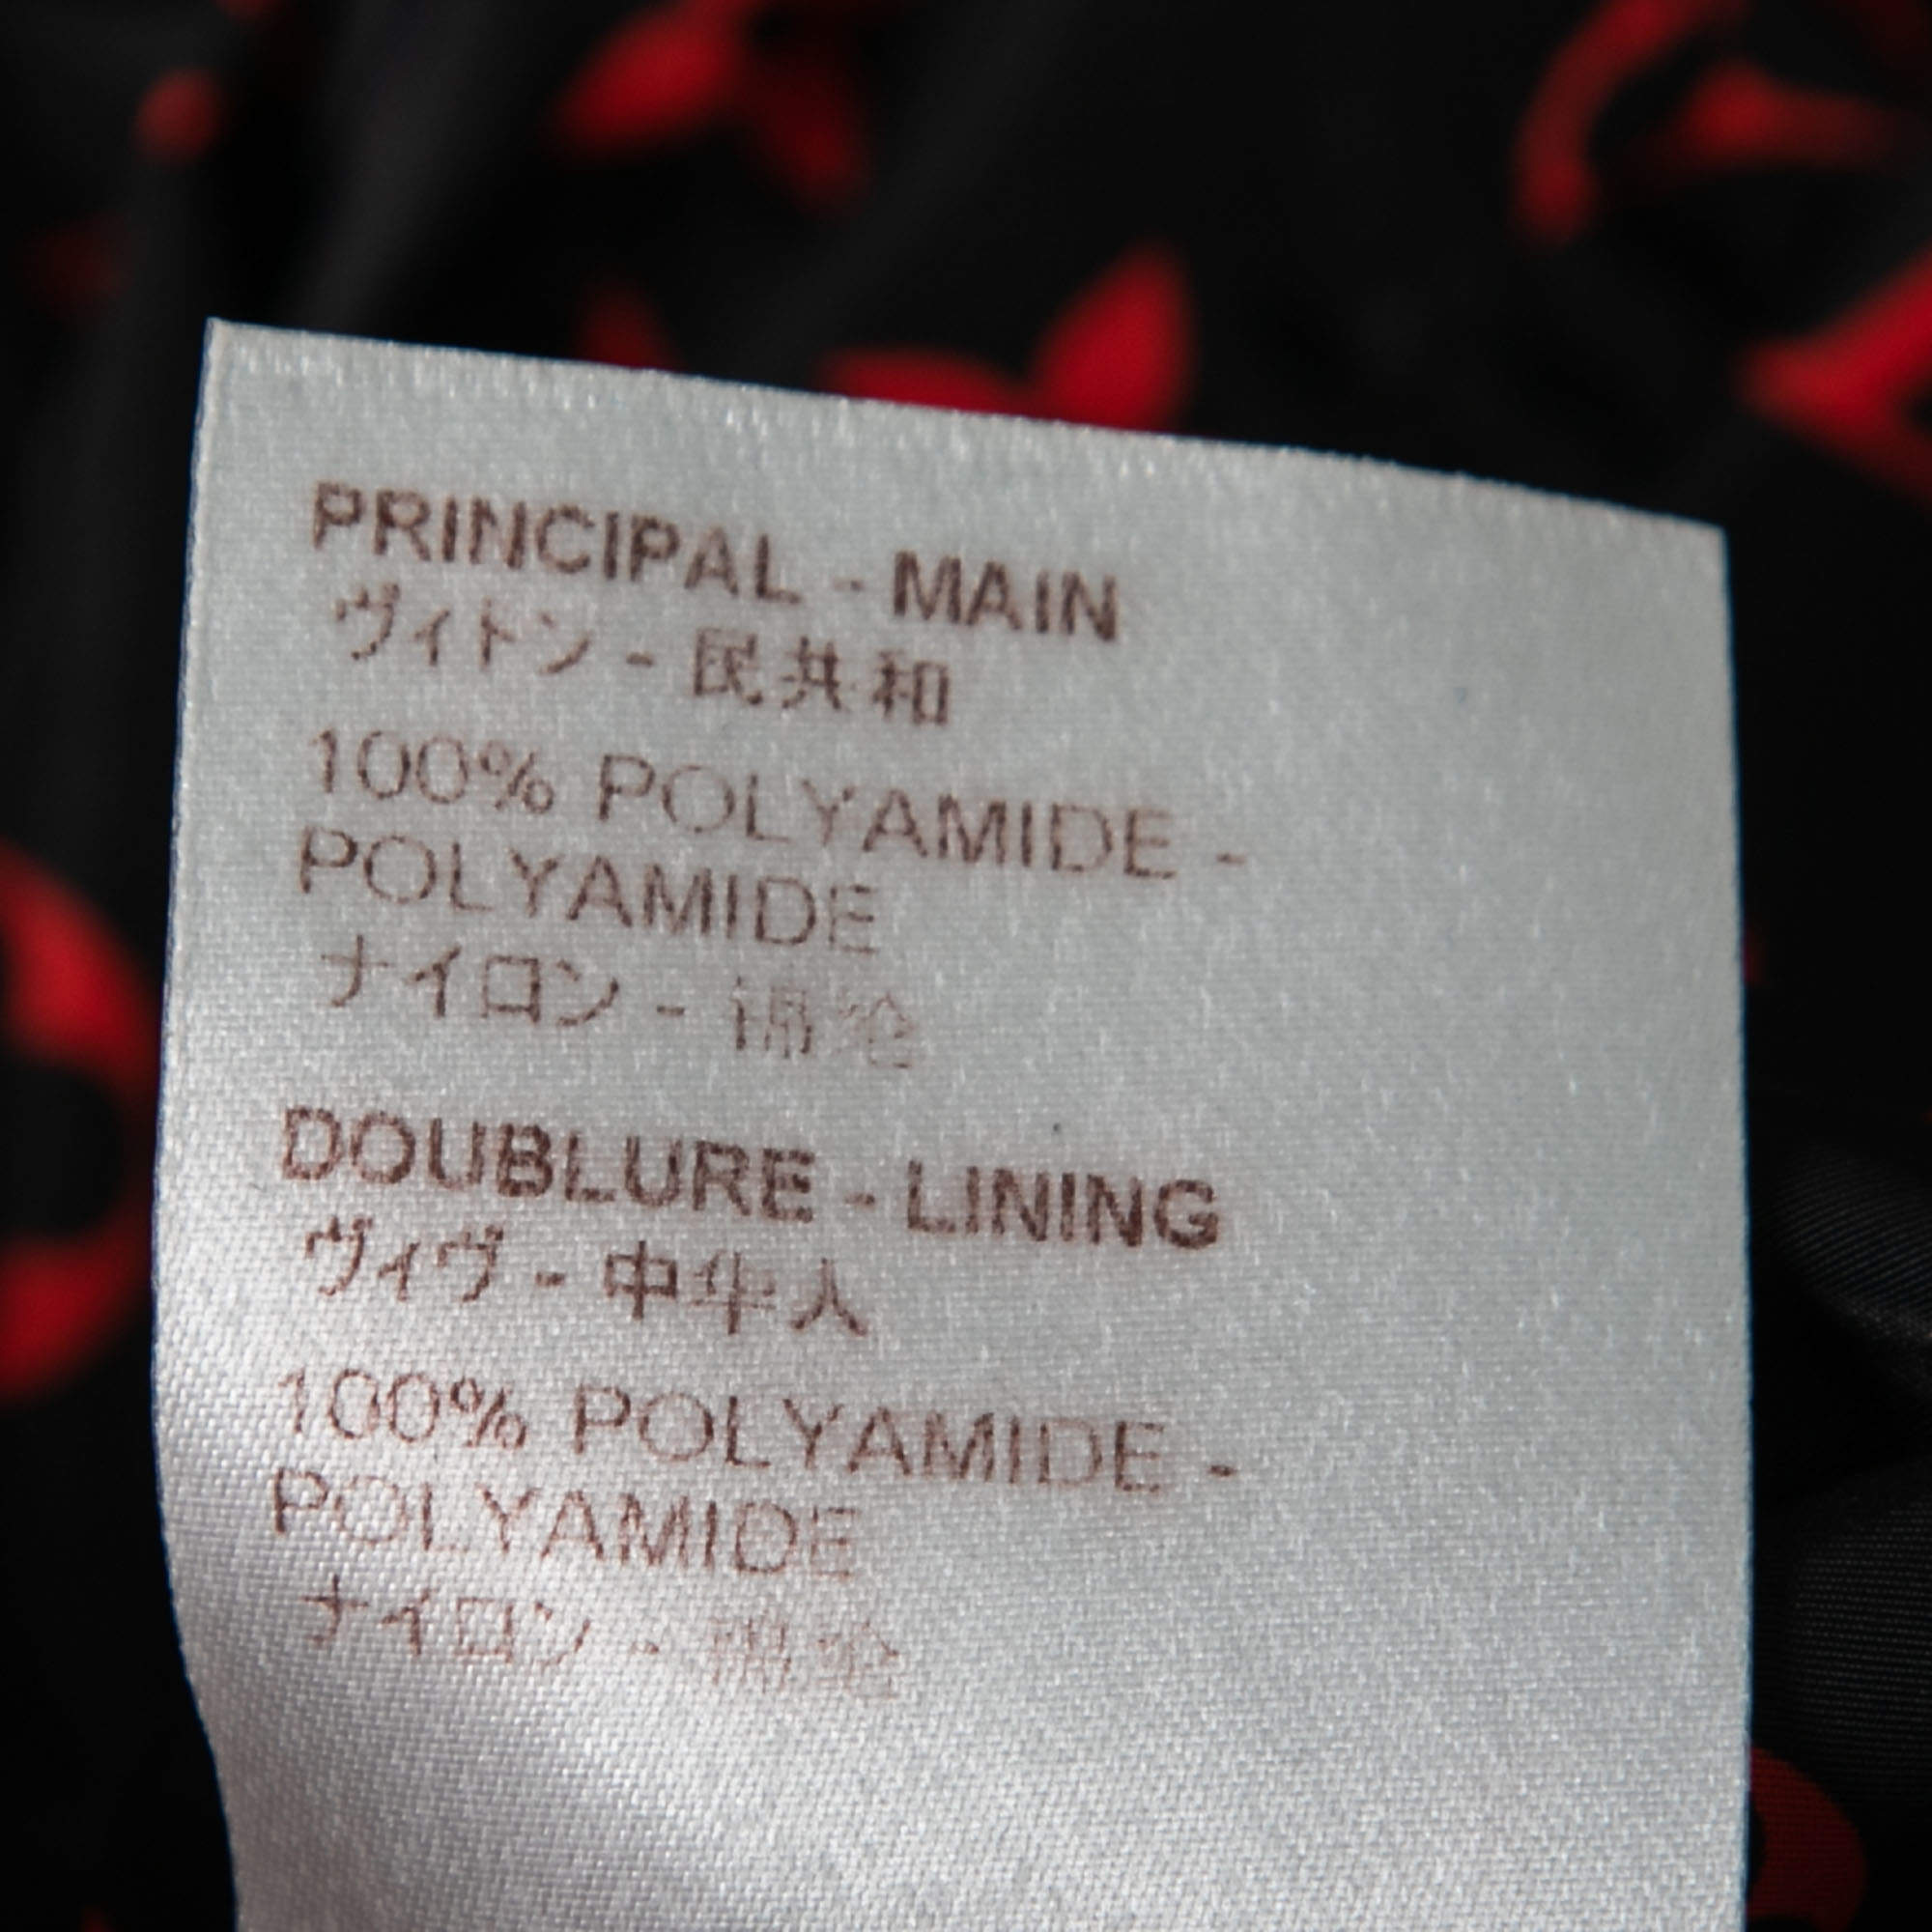 Louis Vuitton Black/Red Monogram Synthetic Reversible Windbreaker Jacket S Louis  Vuitton